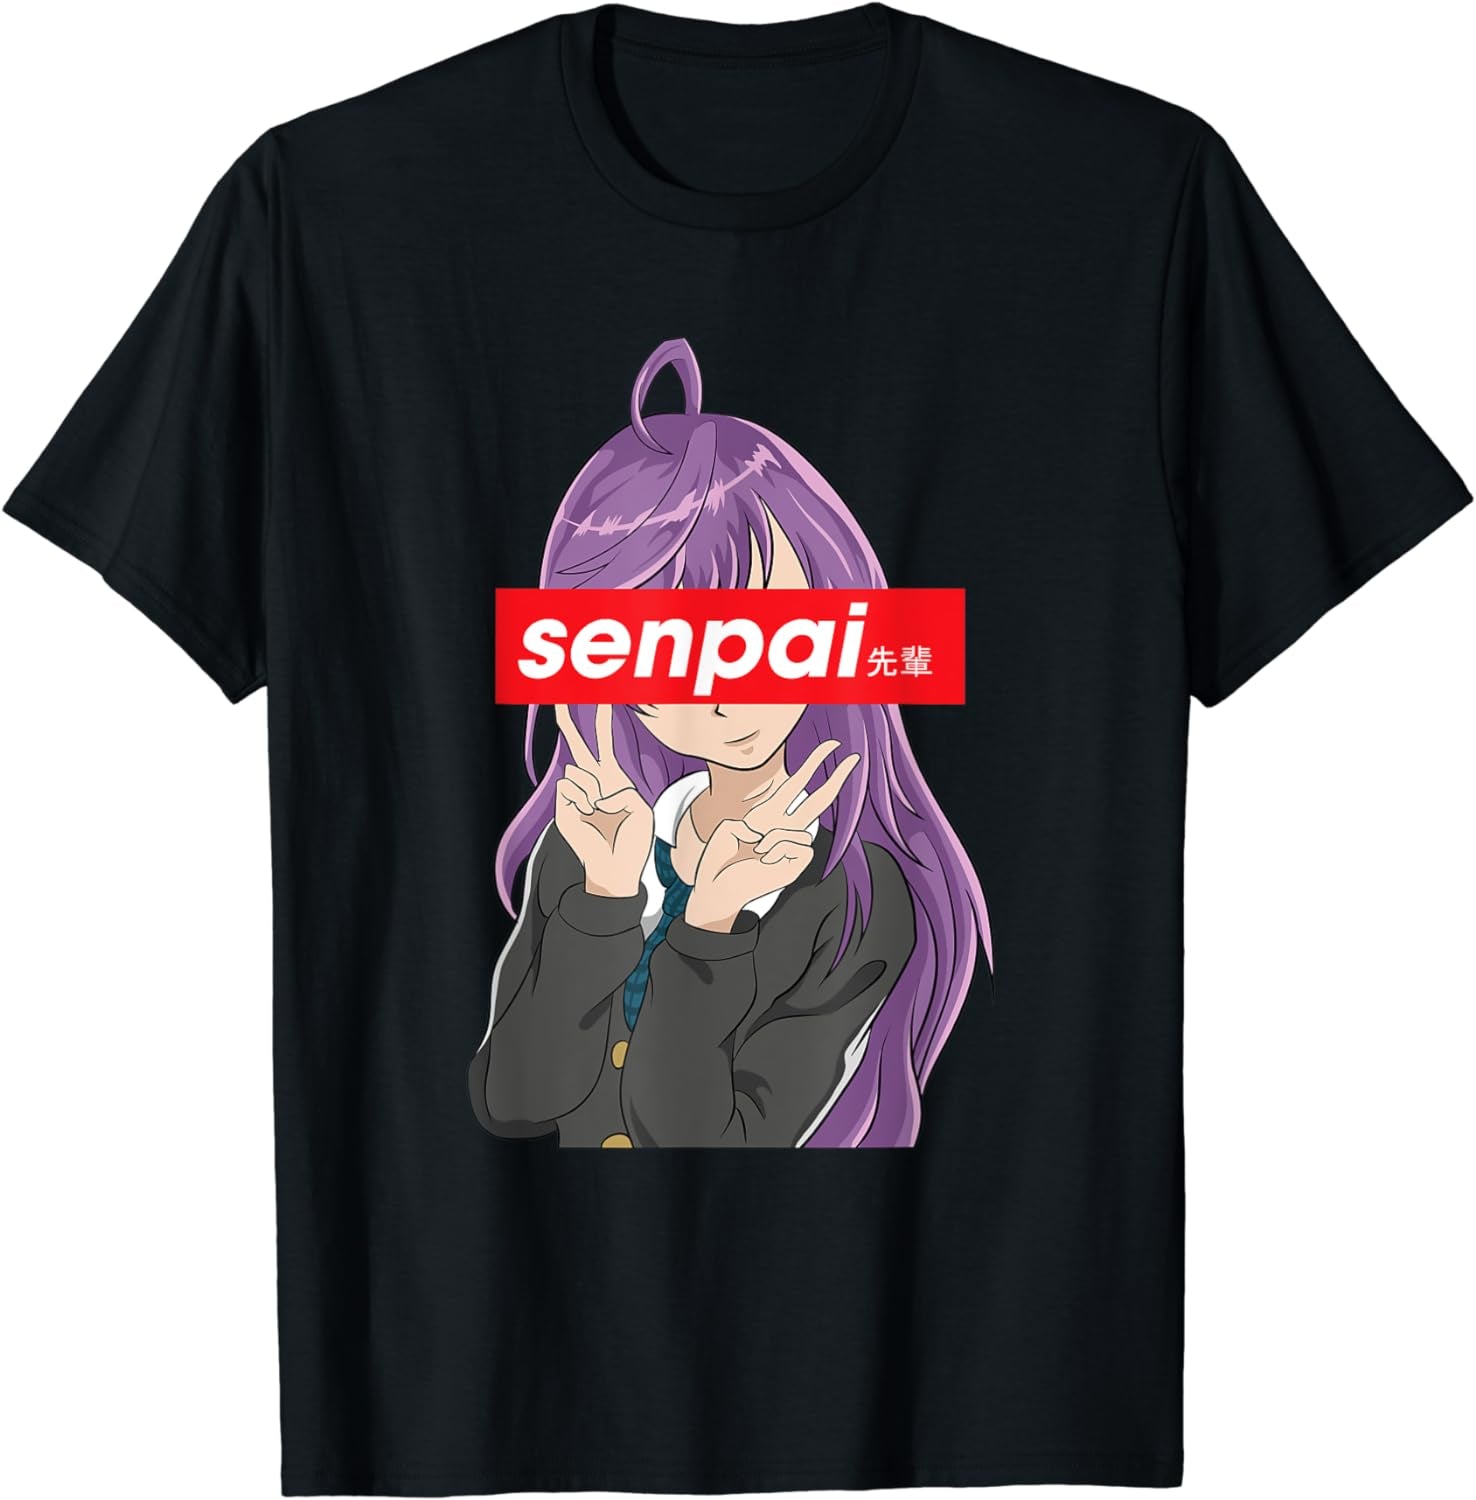 Japanese Anime Girl Shirt - Notice Me Senpai